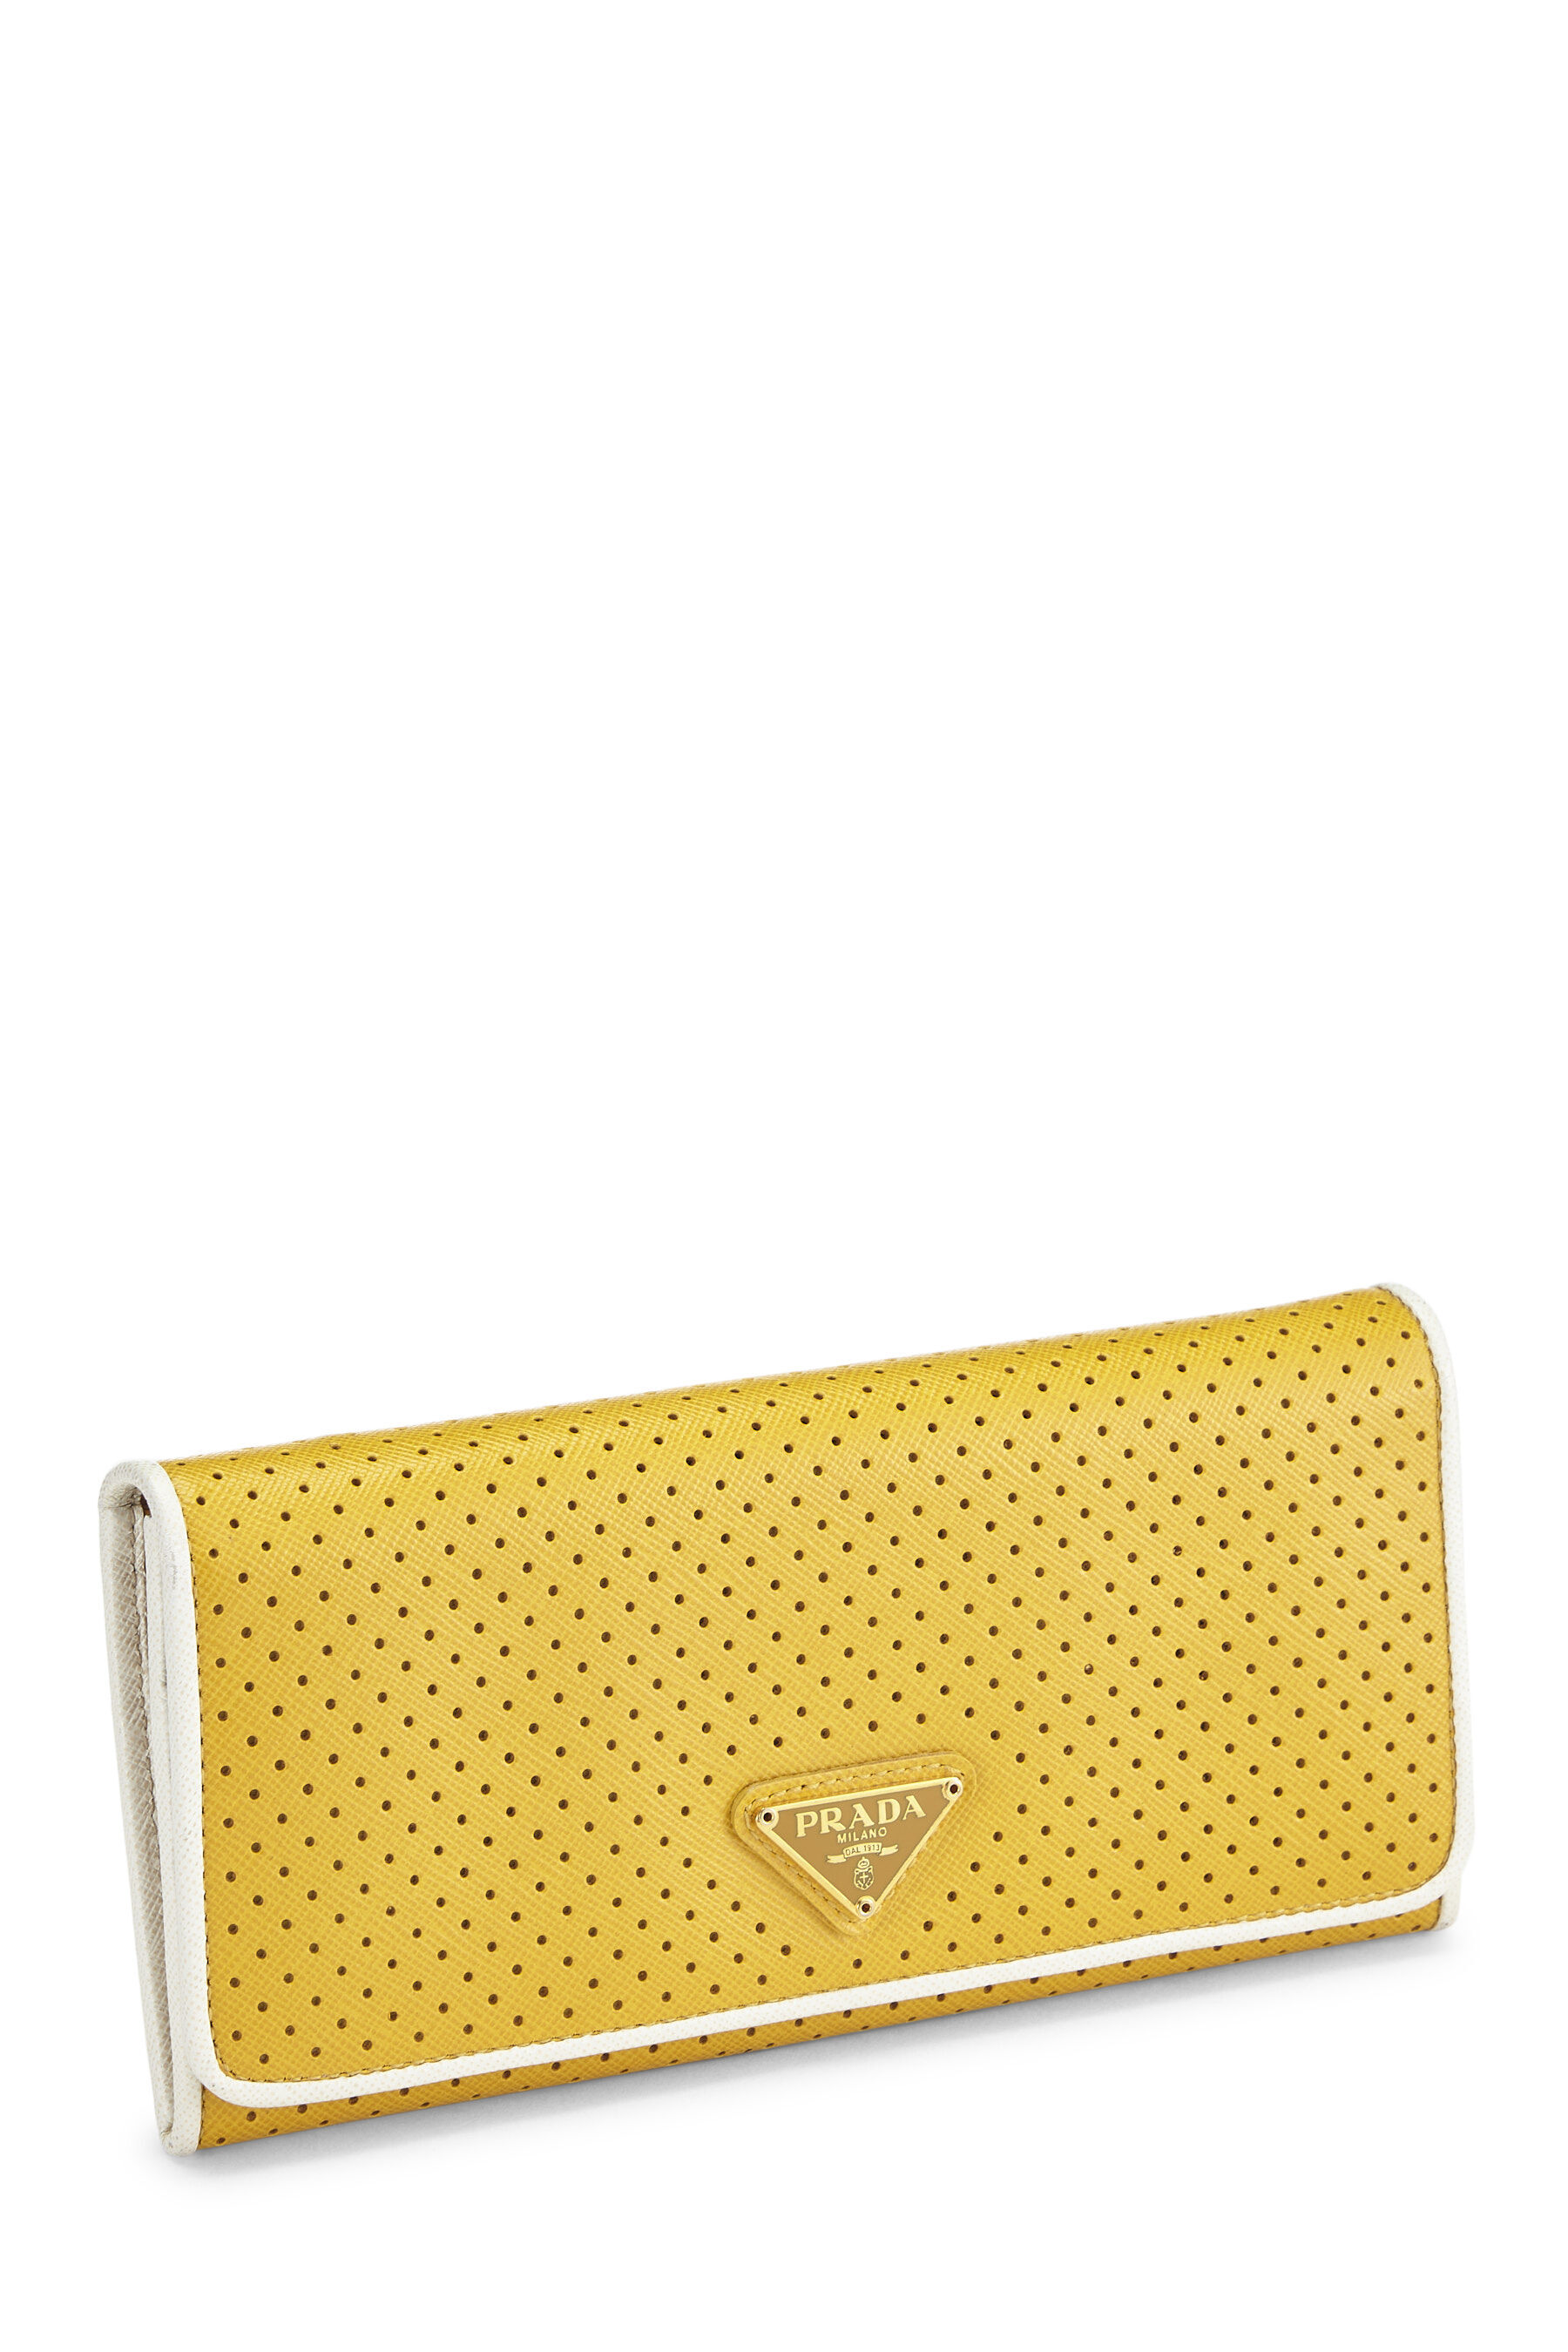 Prada logo-lettering Saffiano Leather Wallet - Farfetch